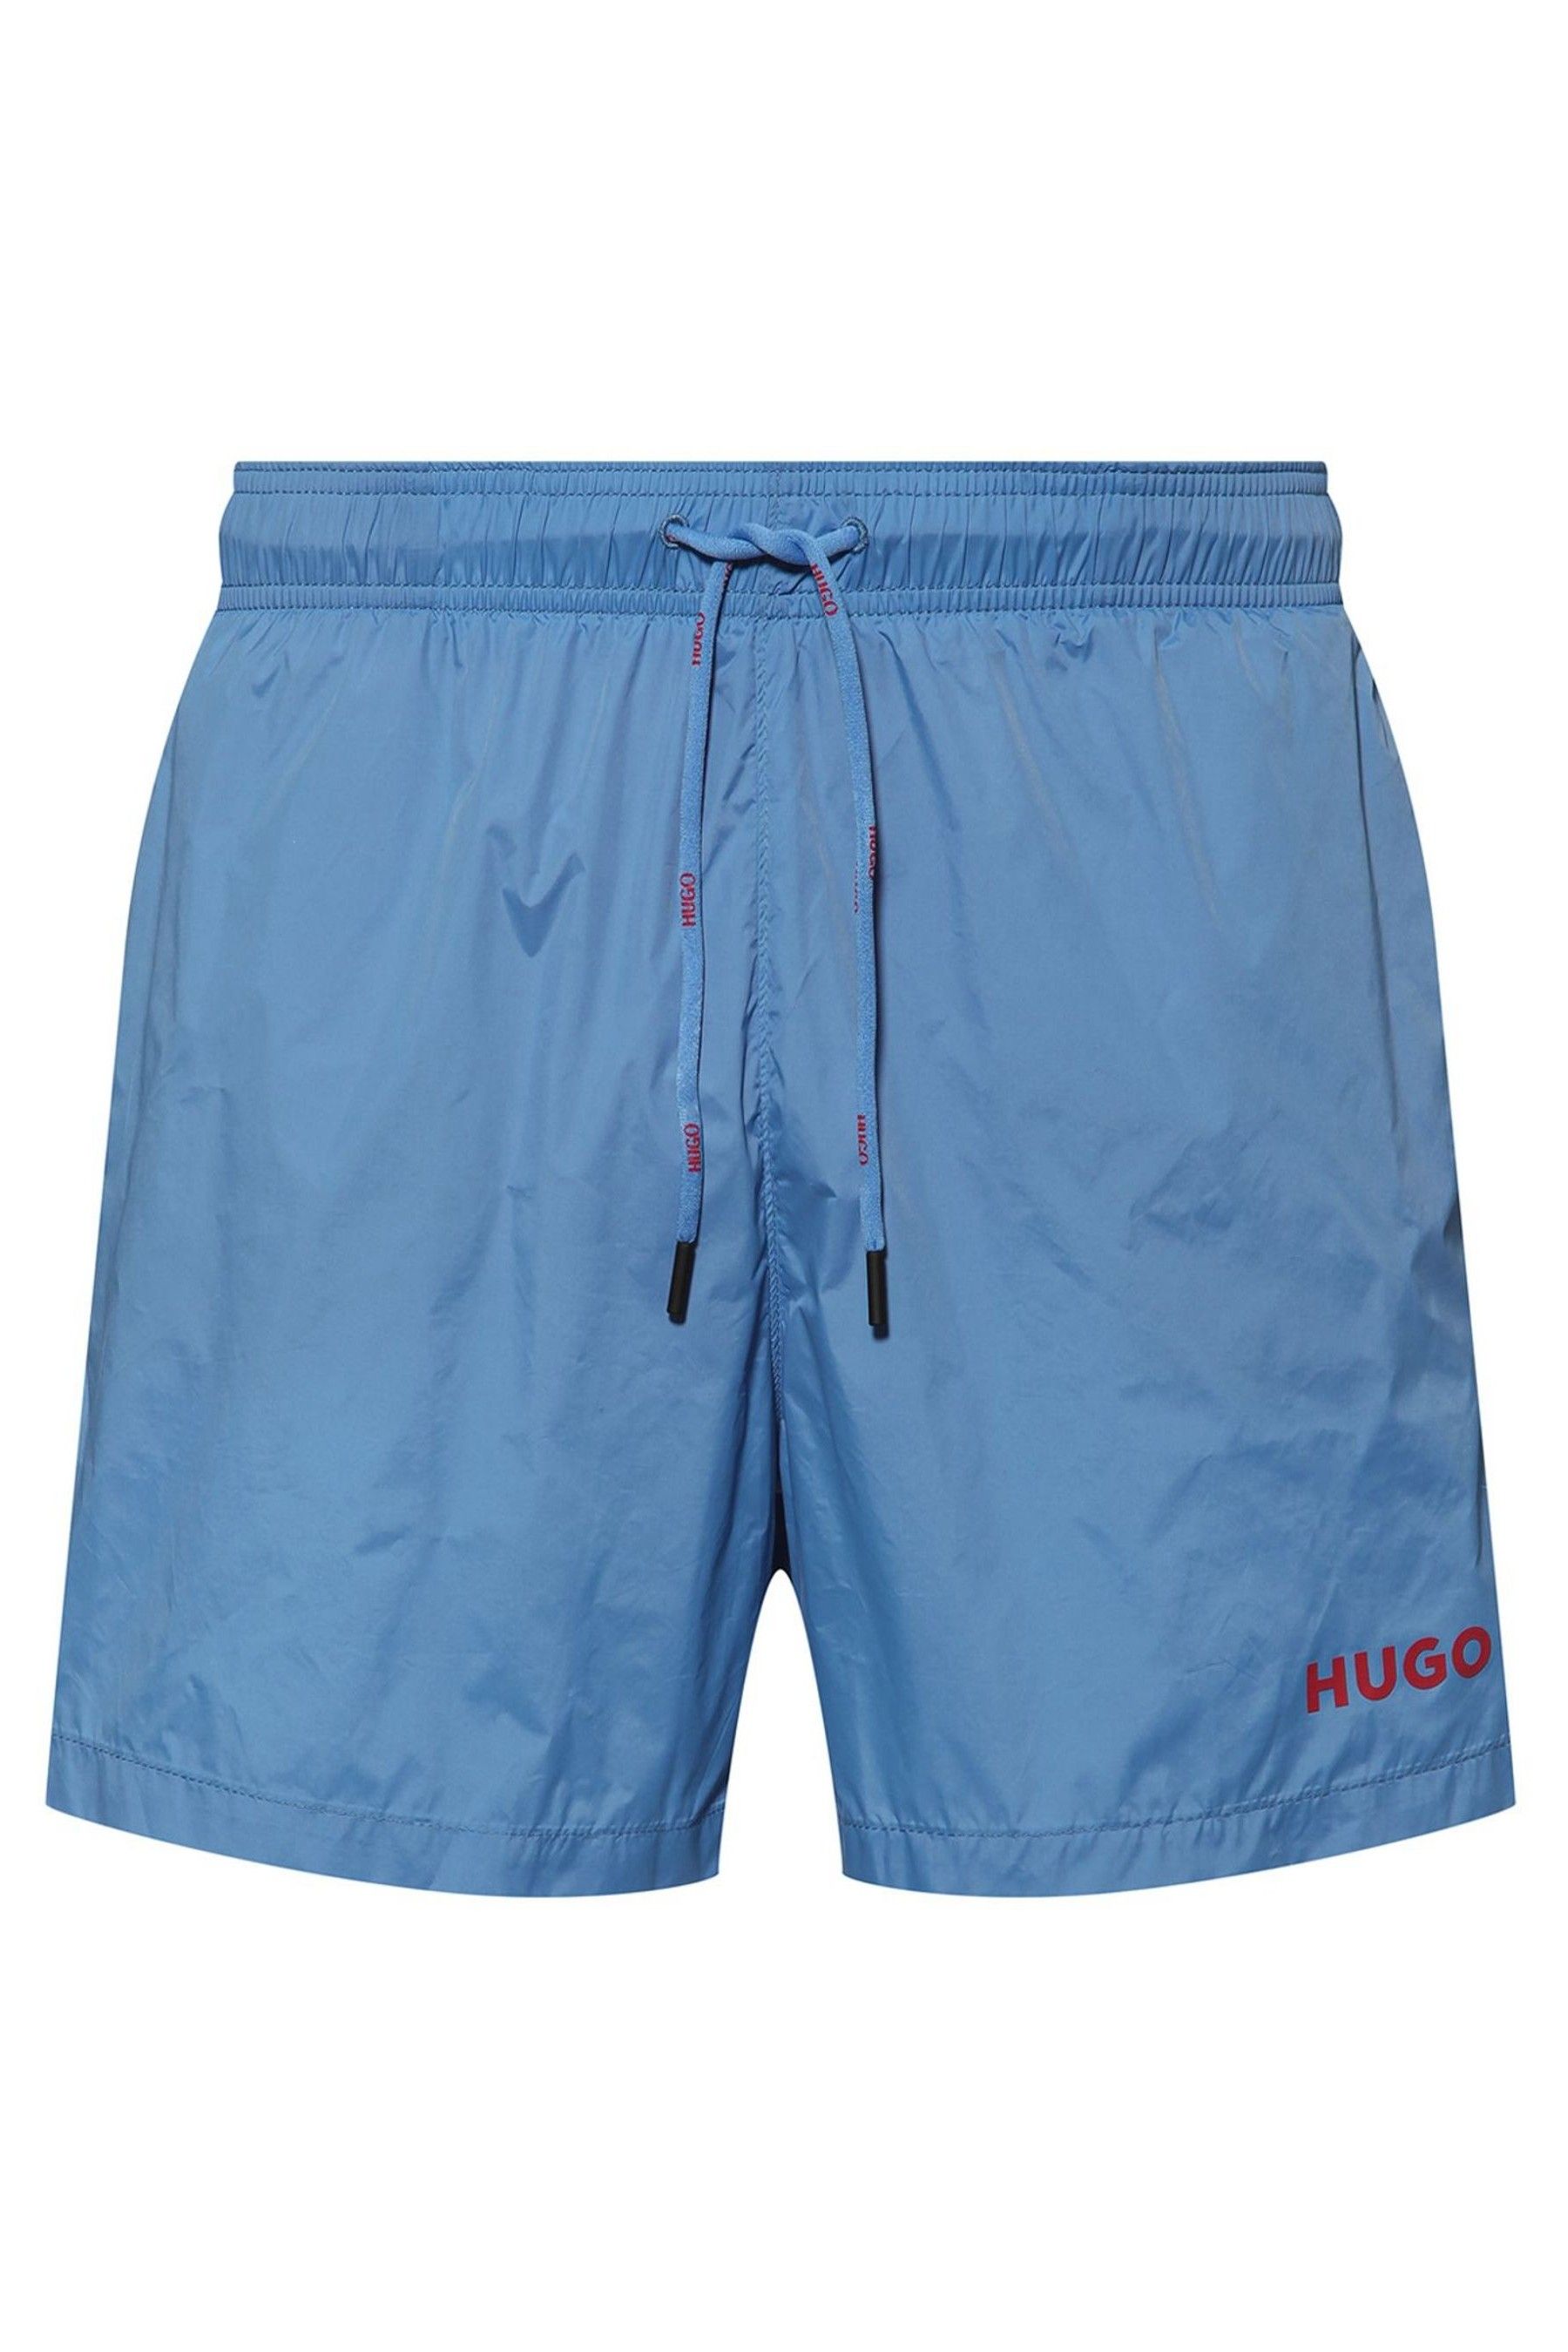 Buy HUGO HAITI Swim Shorts from the Next UK online shop